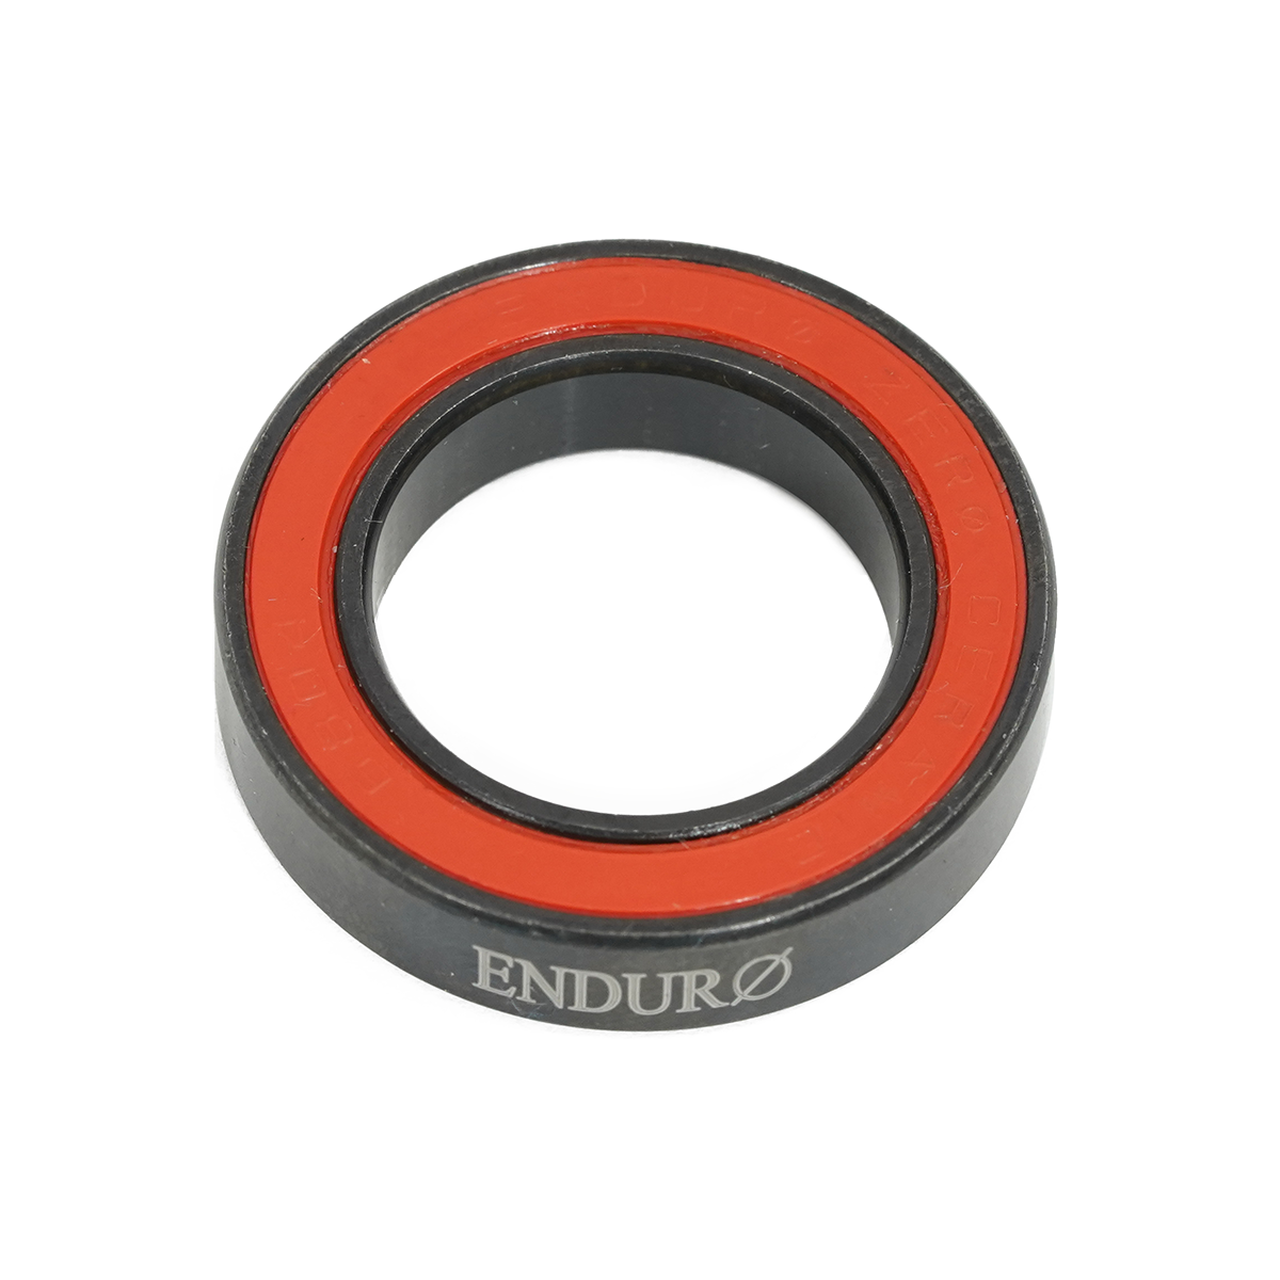 Enduro CO 6804 VV - Enduro Zero, Black-Oxide, Ceramic Hybrid, ABEC-5, Radial Bearing (C3 Clearance) - 20mm x 32mm x 7mm